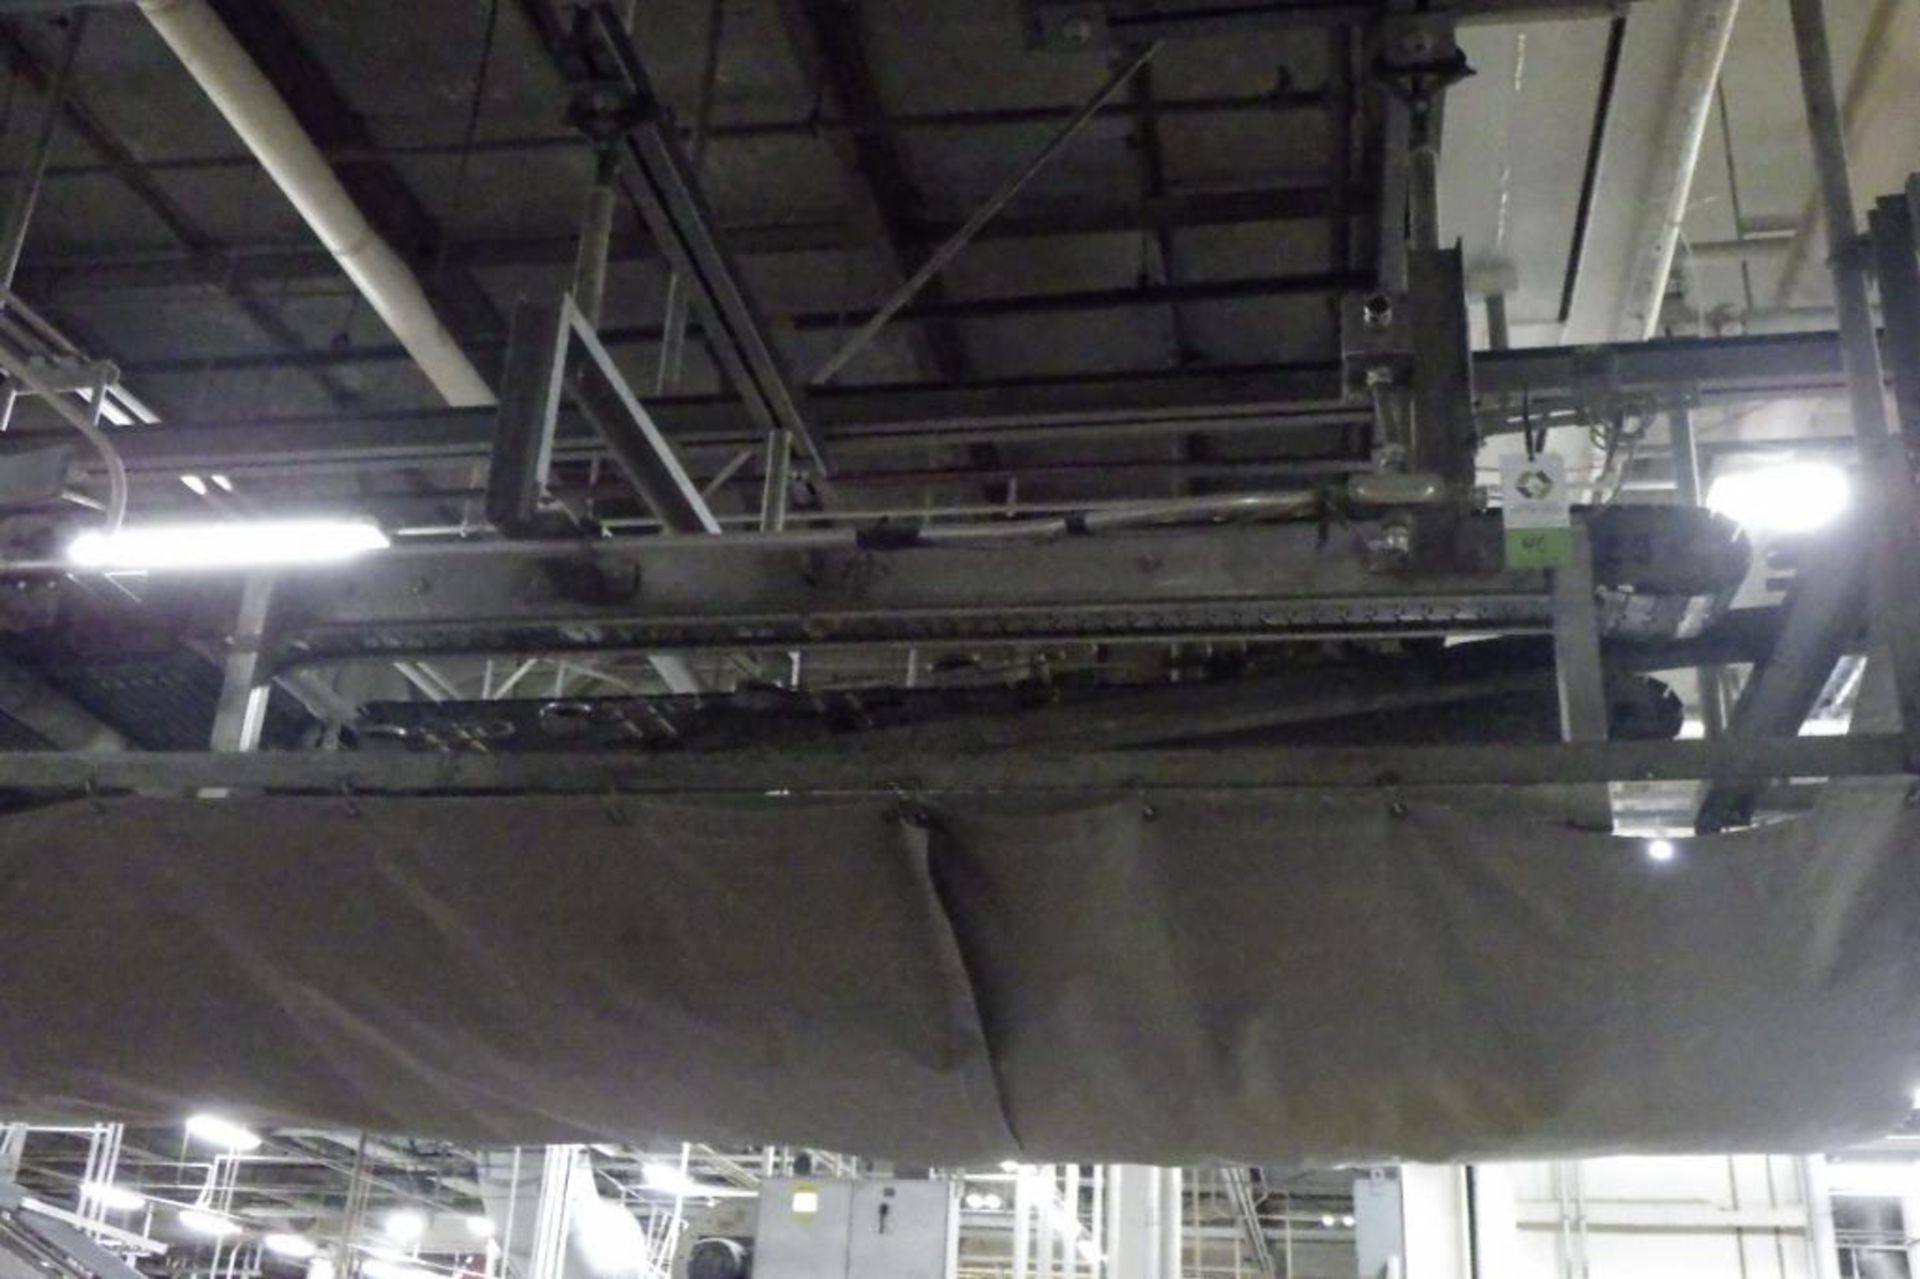 Stewart systems overhead conveyor - Image 18 of 29